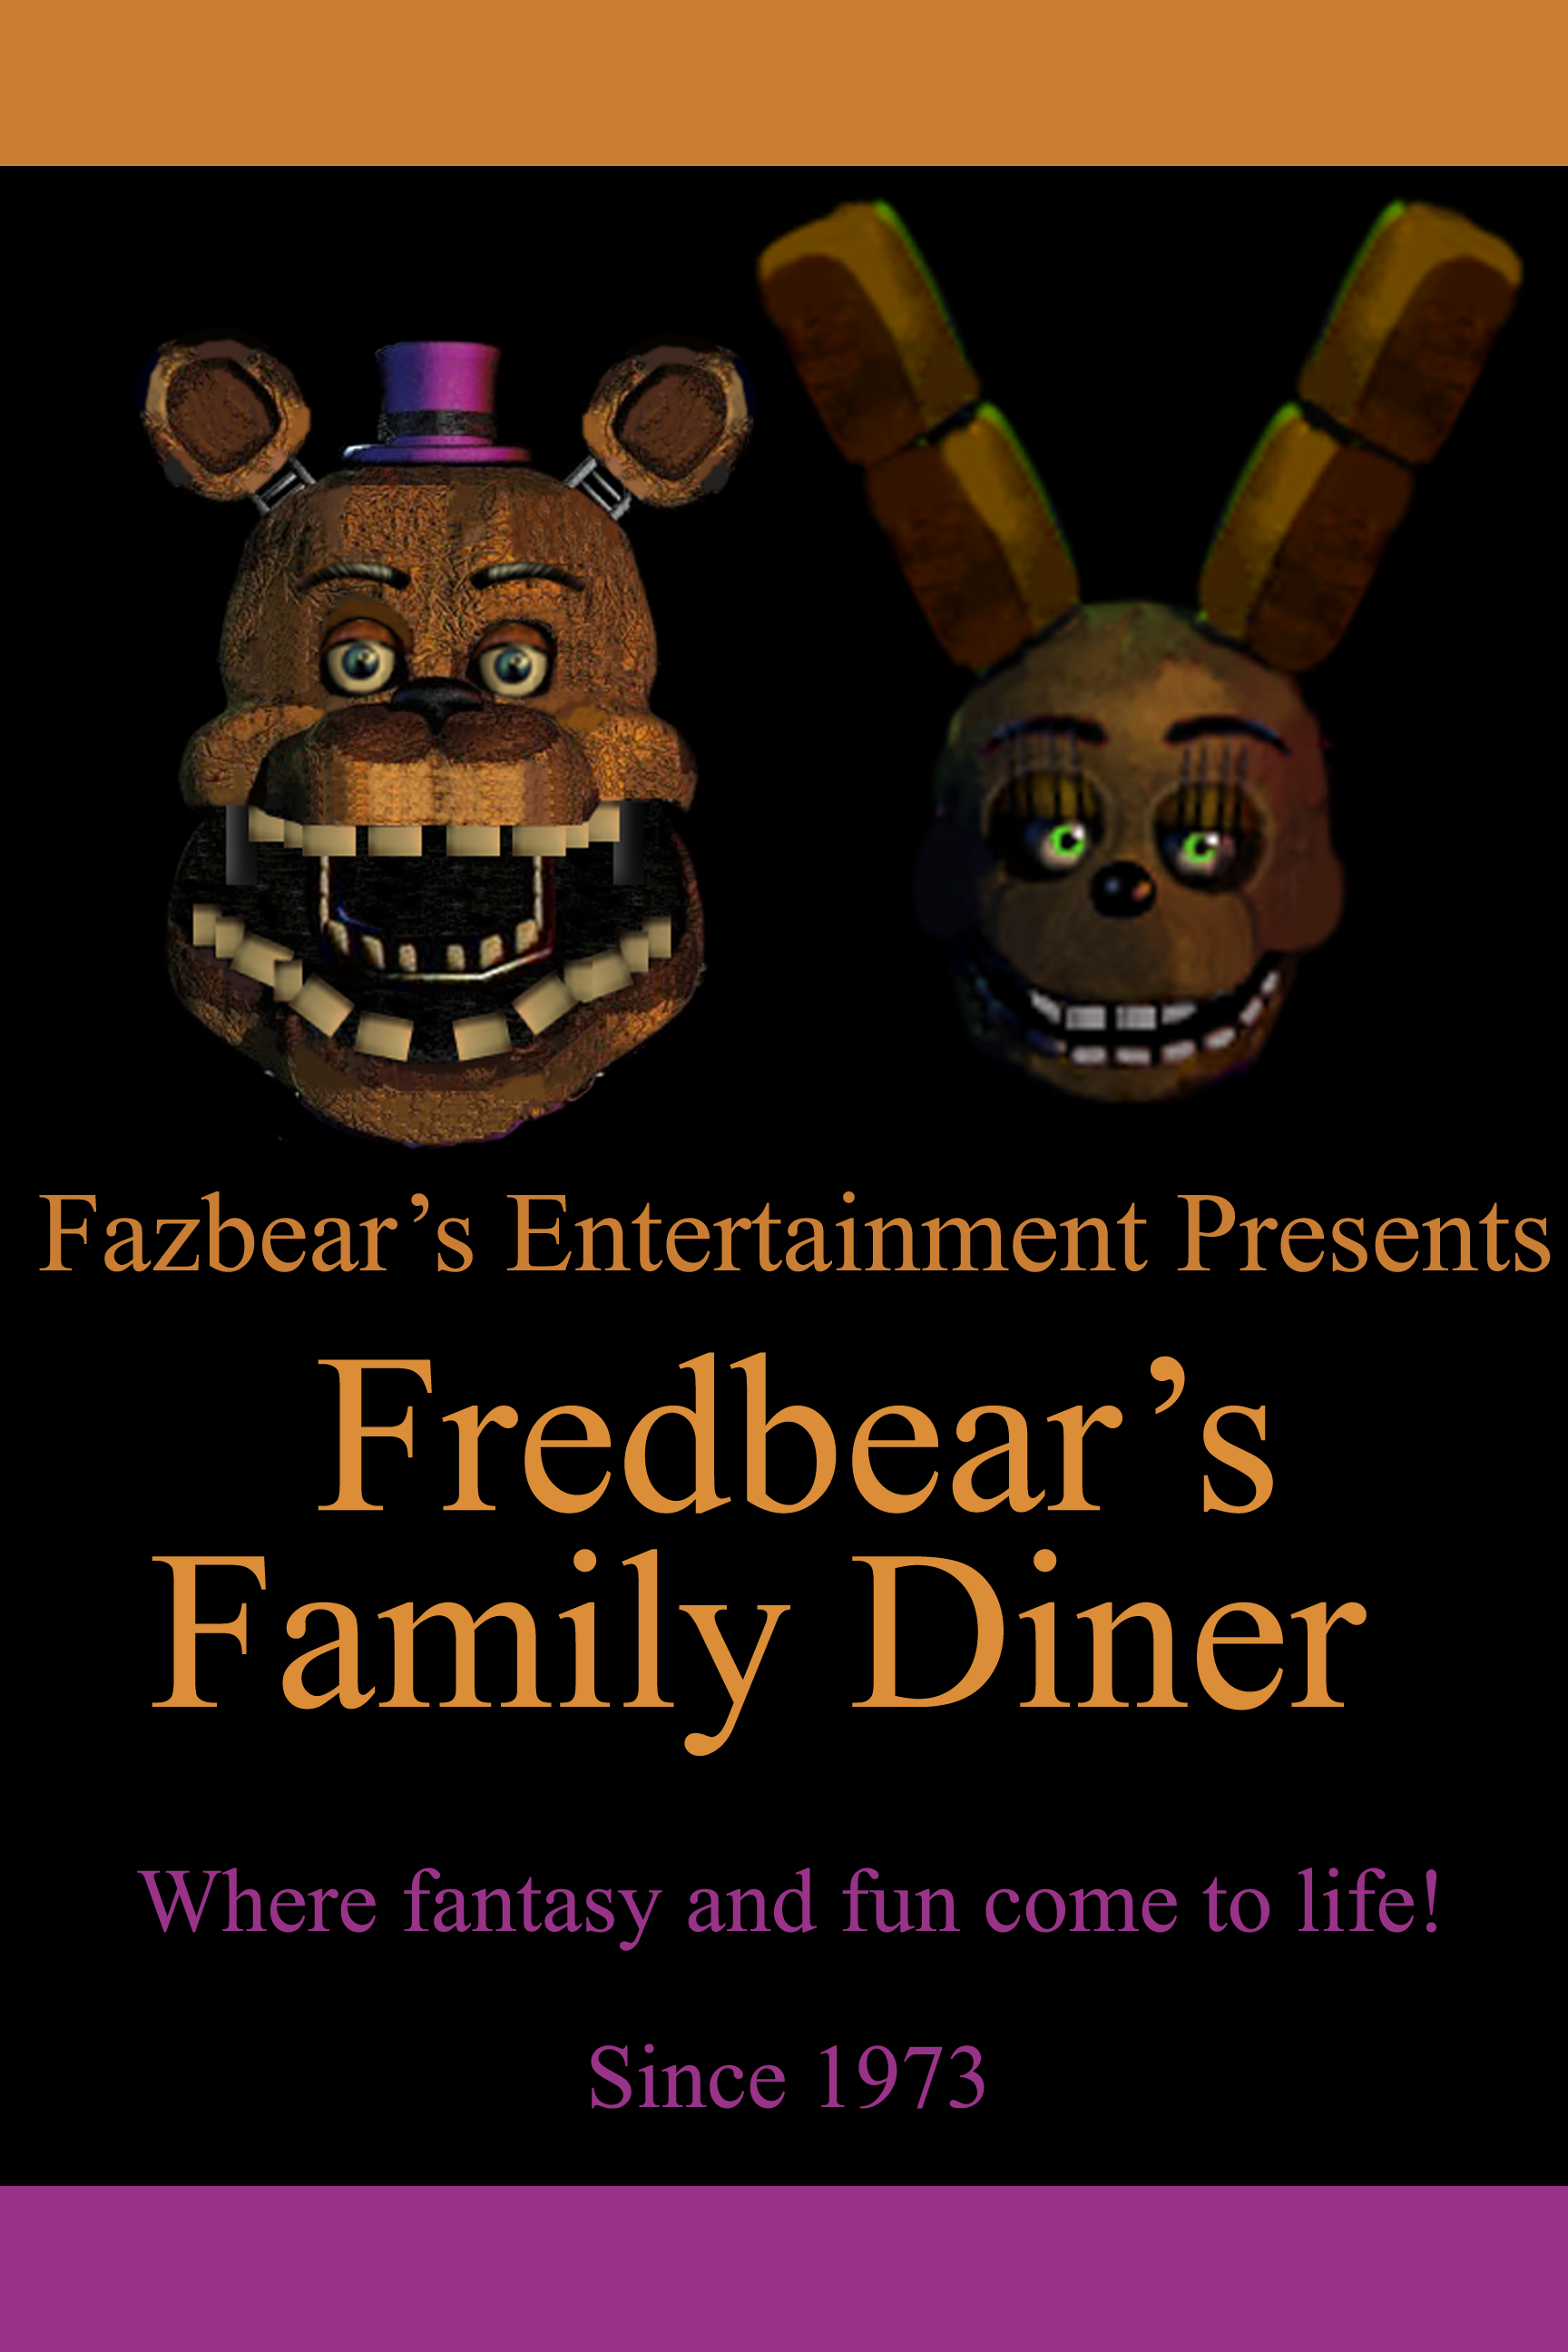 Fredbear's Family Diner (remake) by FTThienAn on DeviantArt